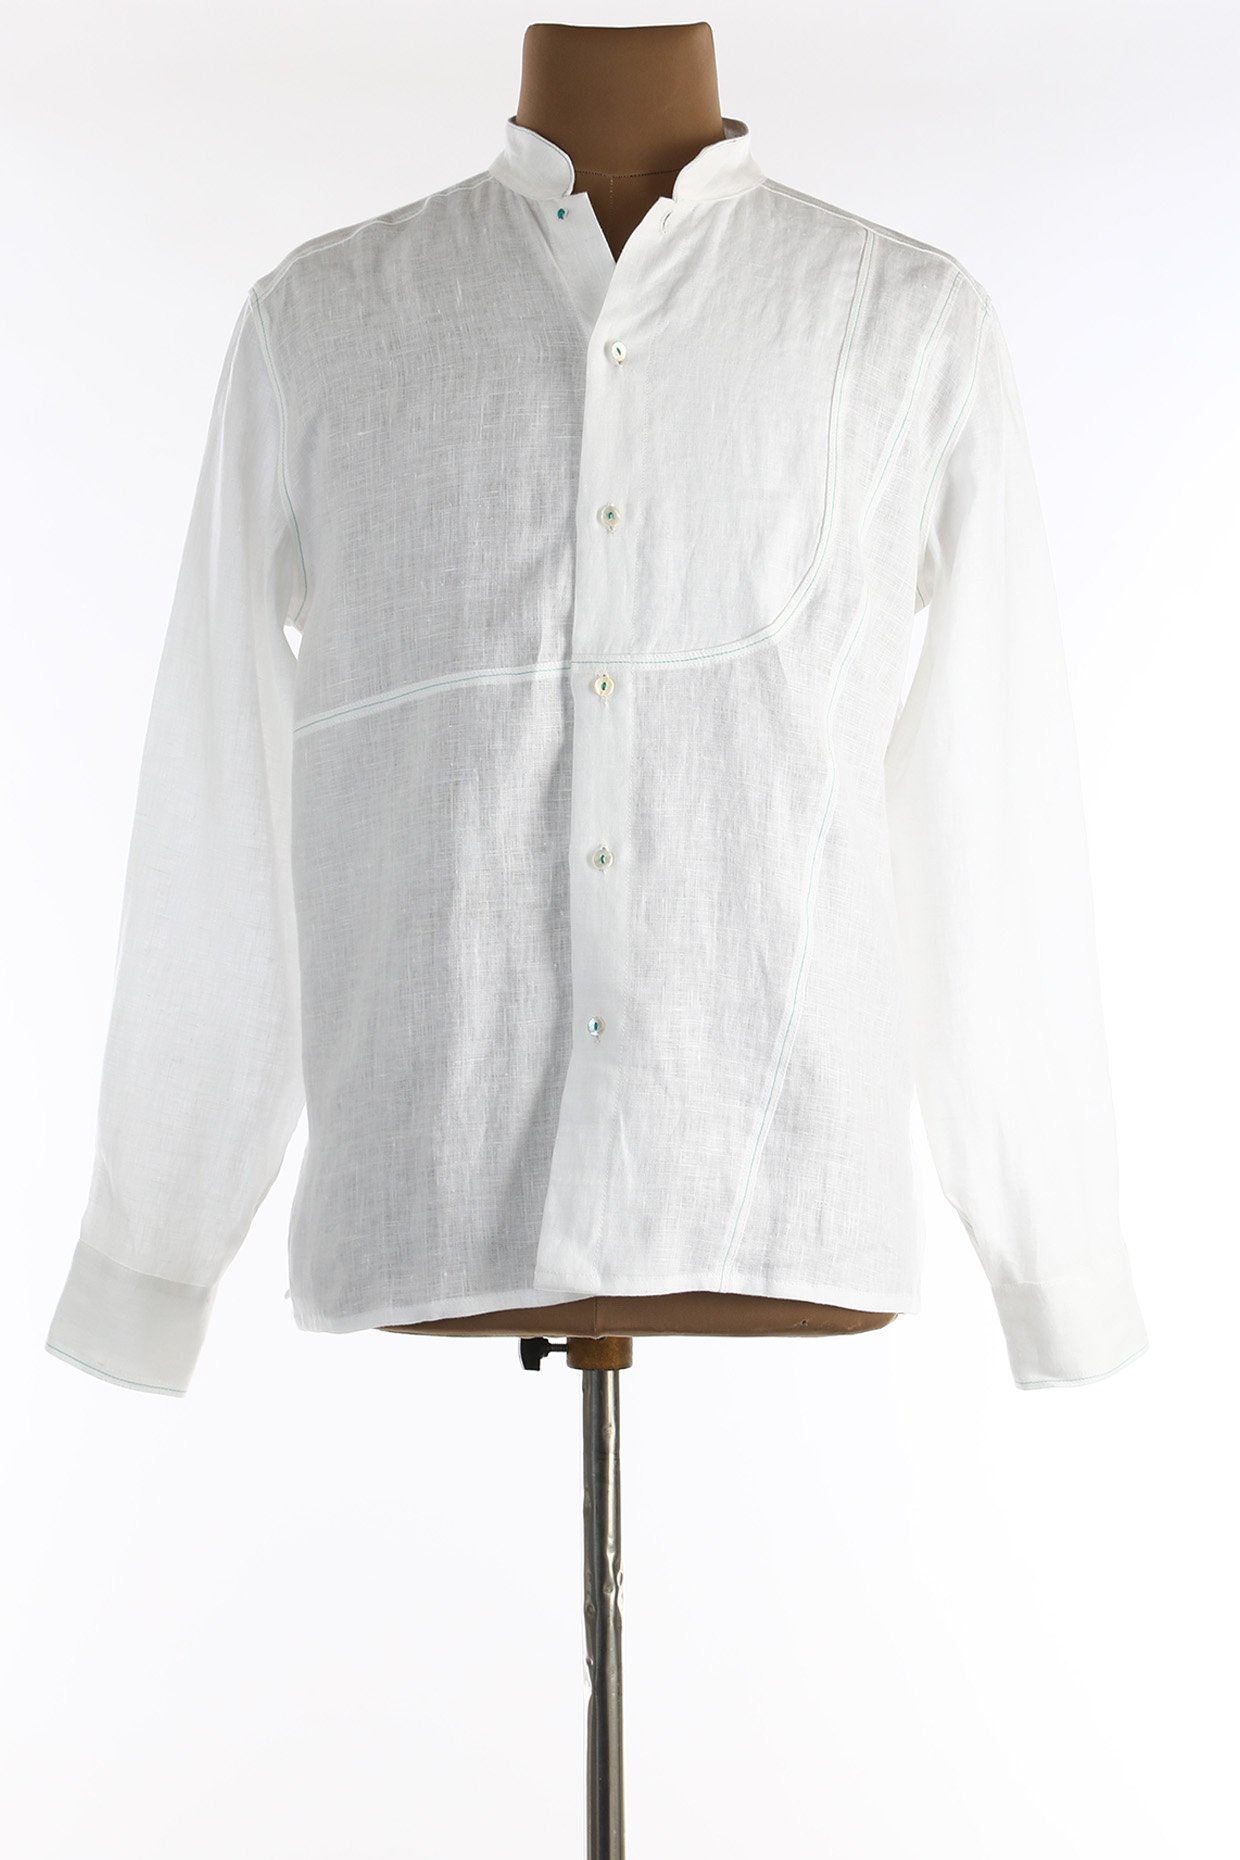 Open Collar Short Sleeve Button Front Shirt With Black Vertical